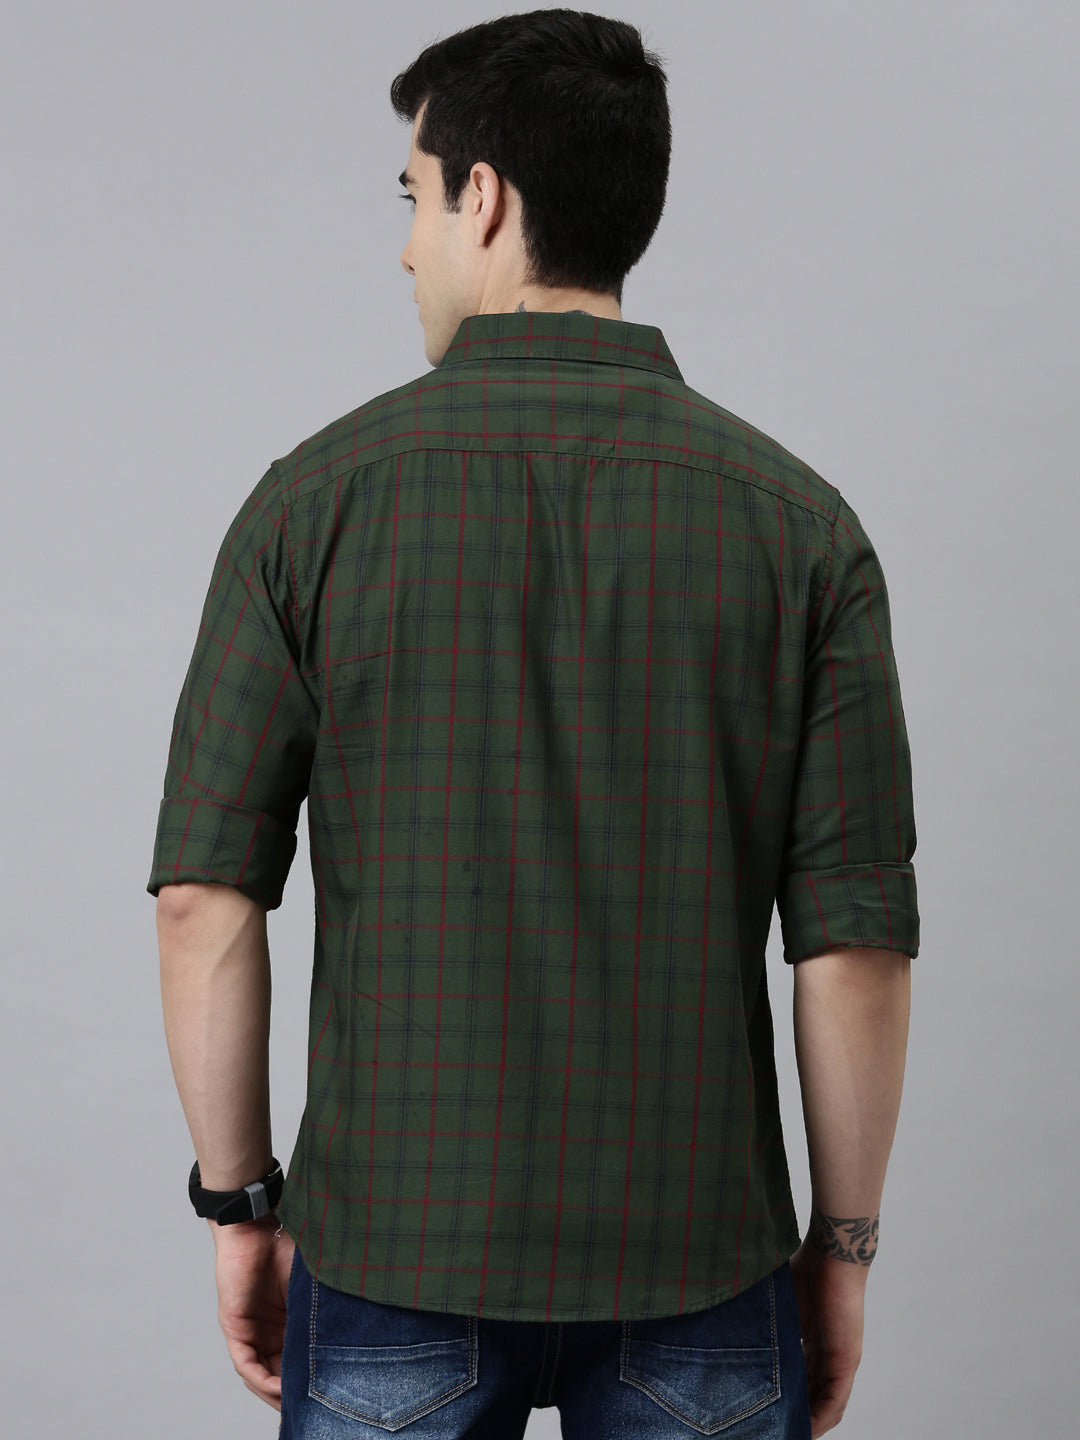 Heritage Green Checks Shirt Checks Shirt Bushirt   